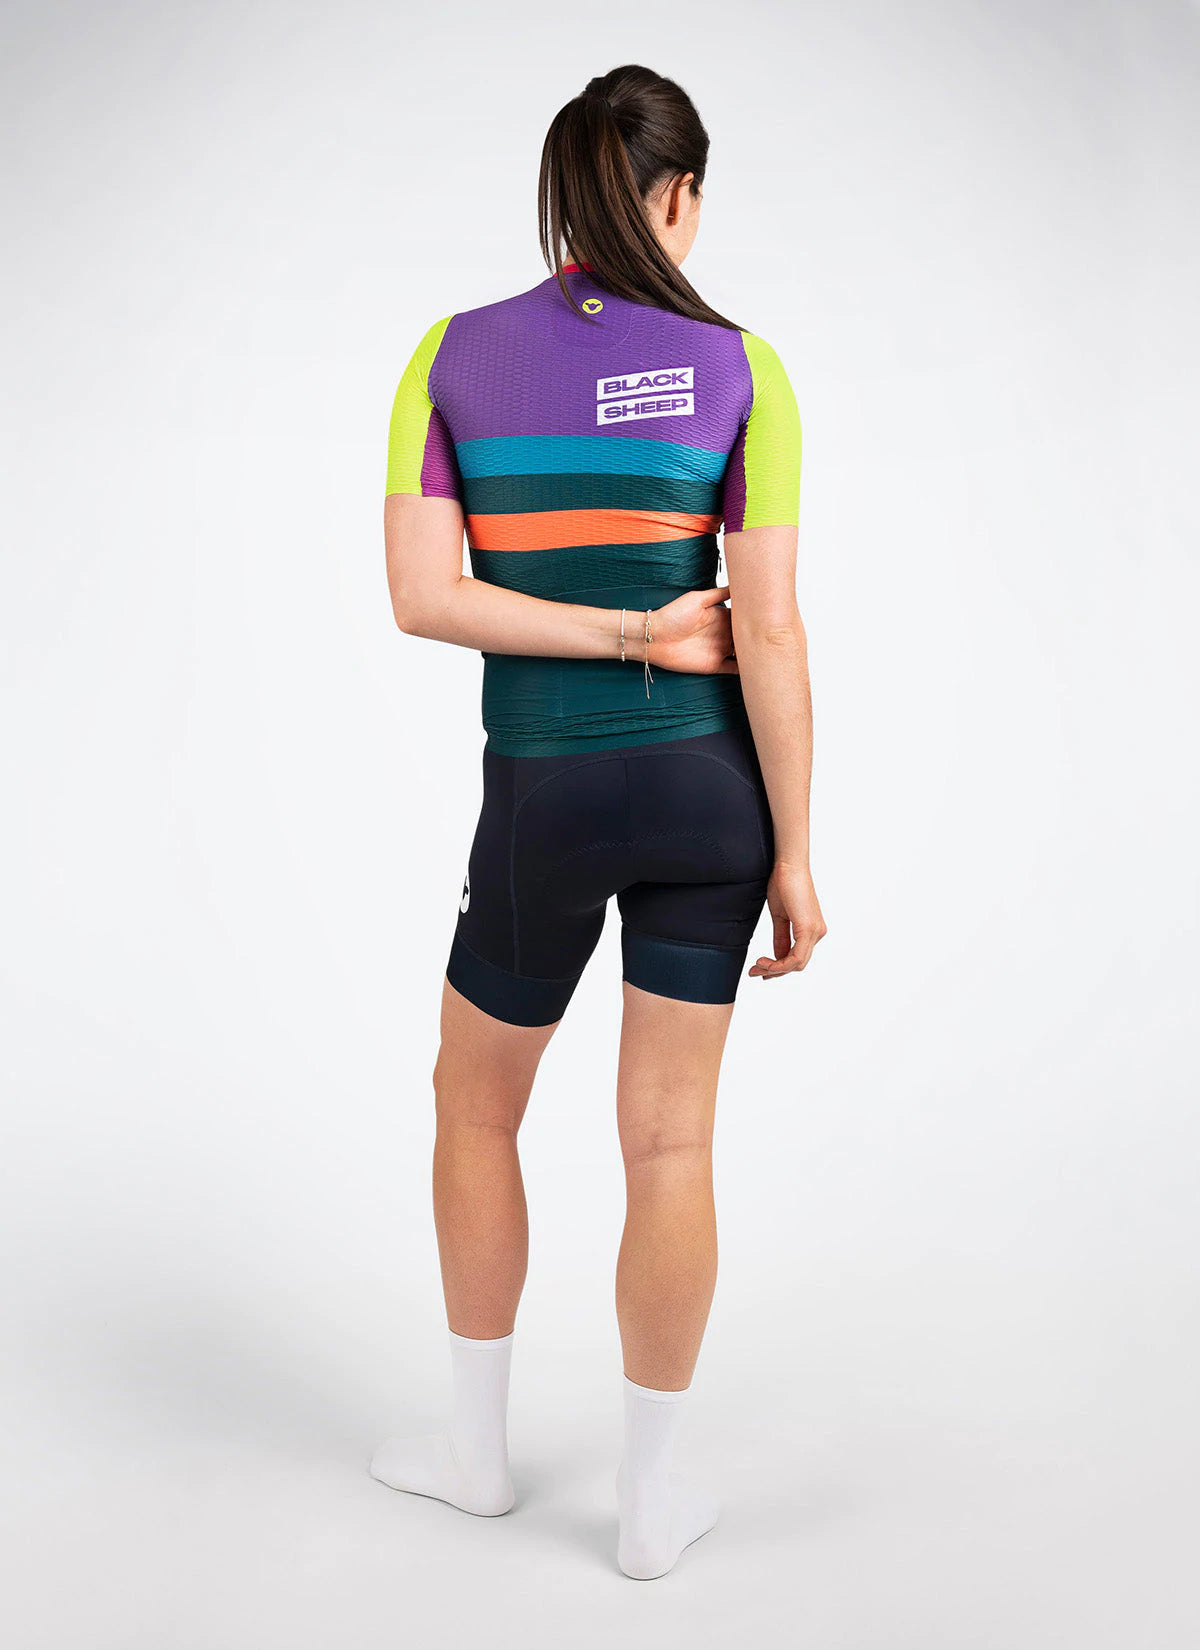 Black Sheep Cycling Women&#39;s WMN LuxLite Jersey - Classics Flanders | CYCLISM